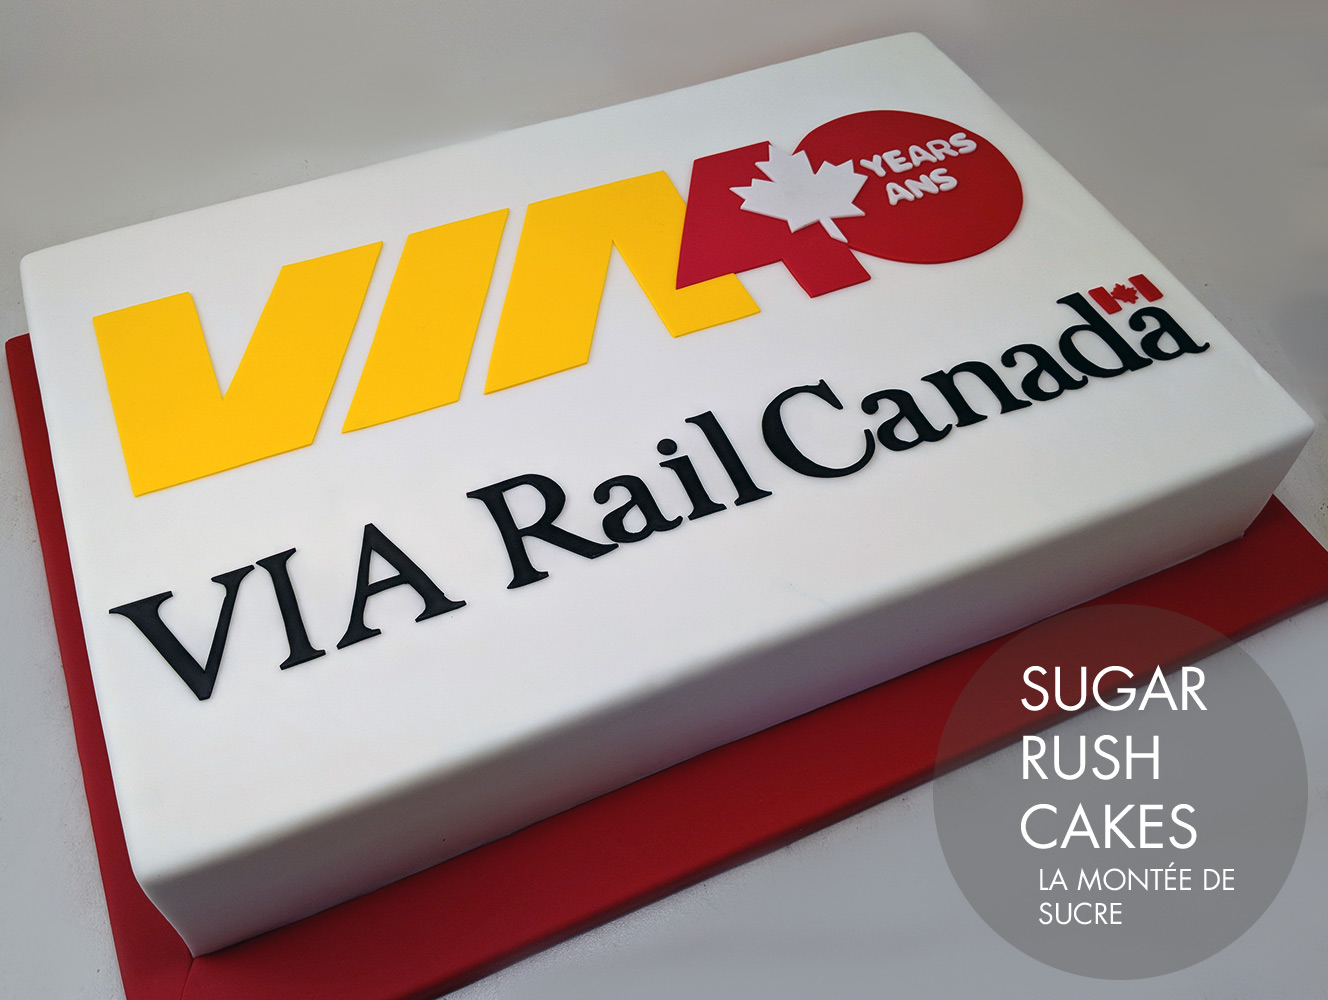 VIA Rail Cake